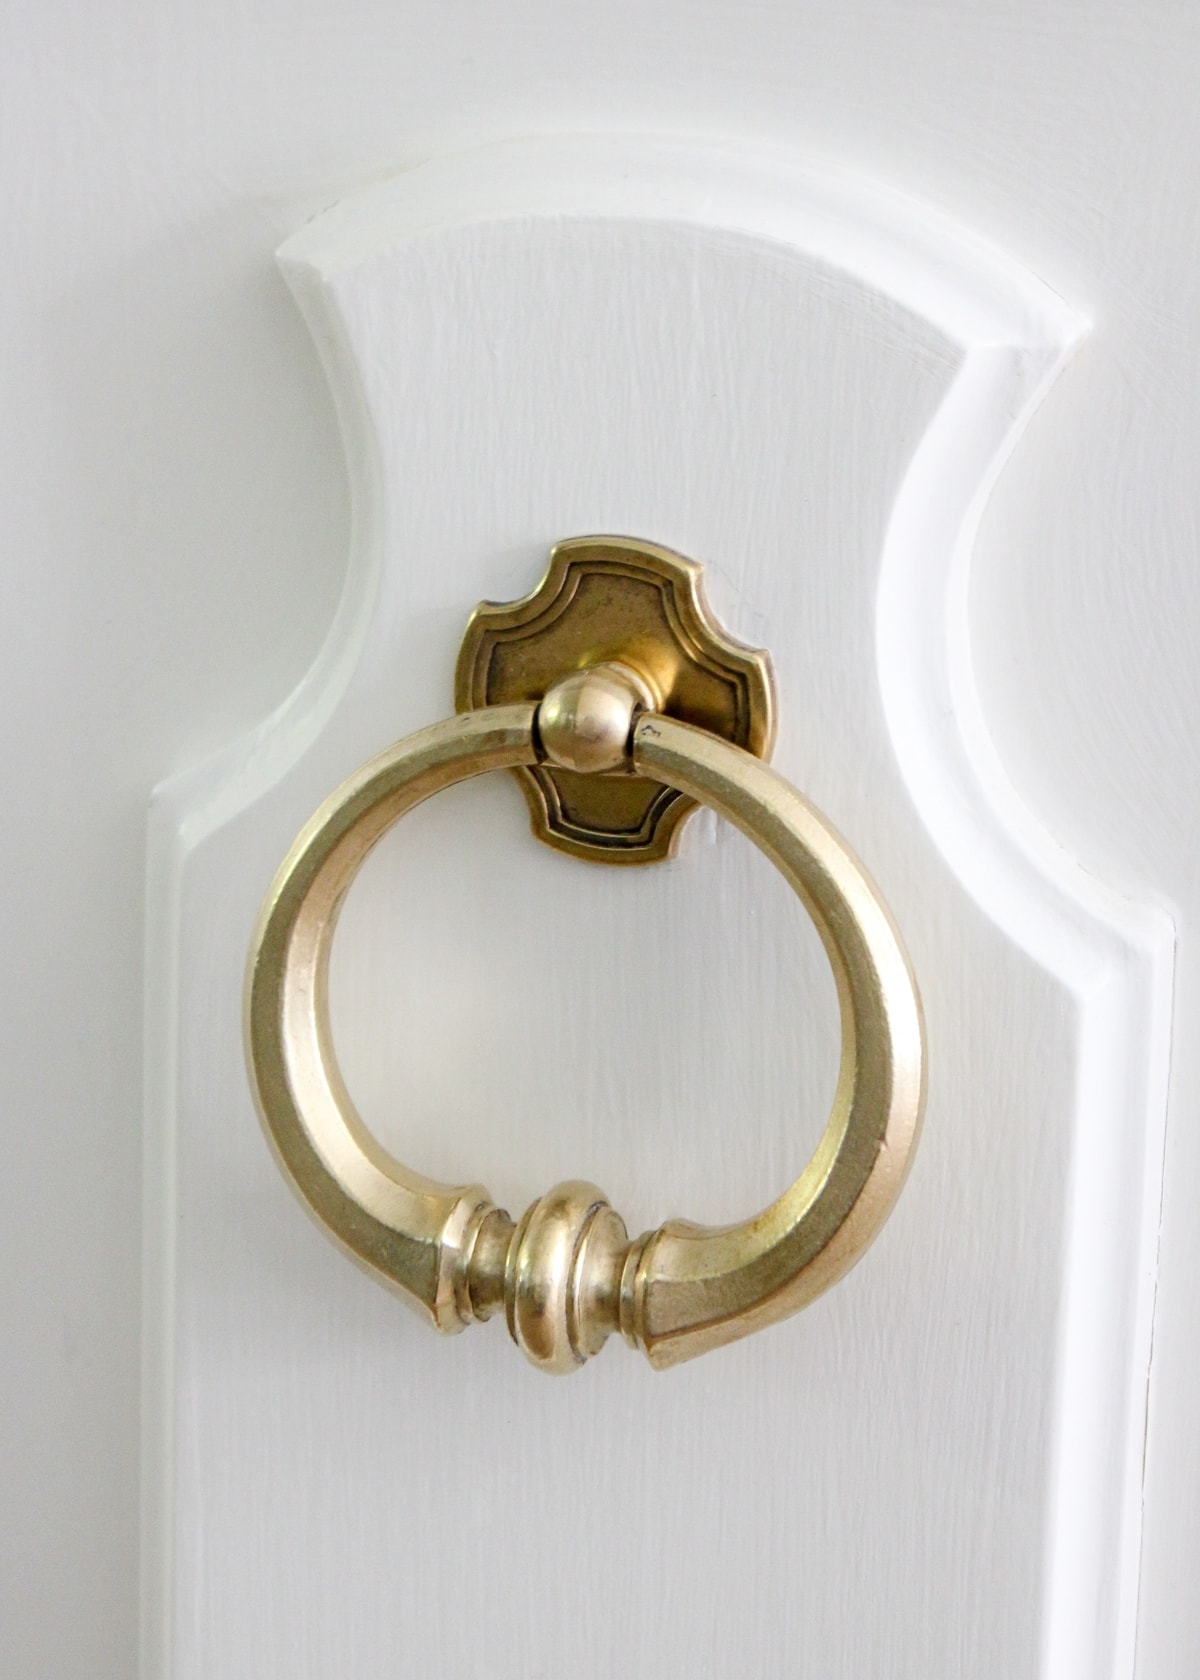 Brass Doorknob makeover// How to Spray Paint Hardware 